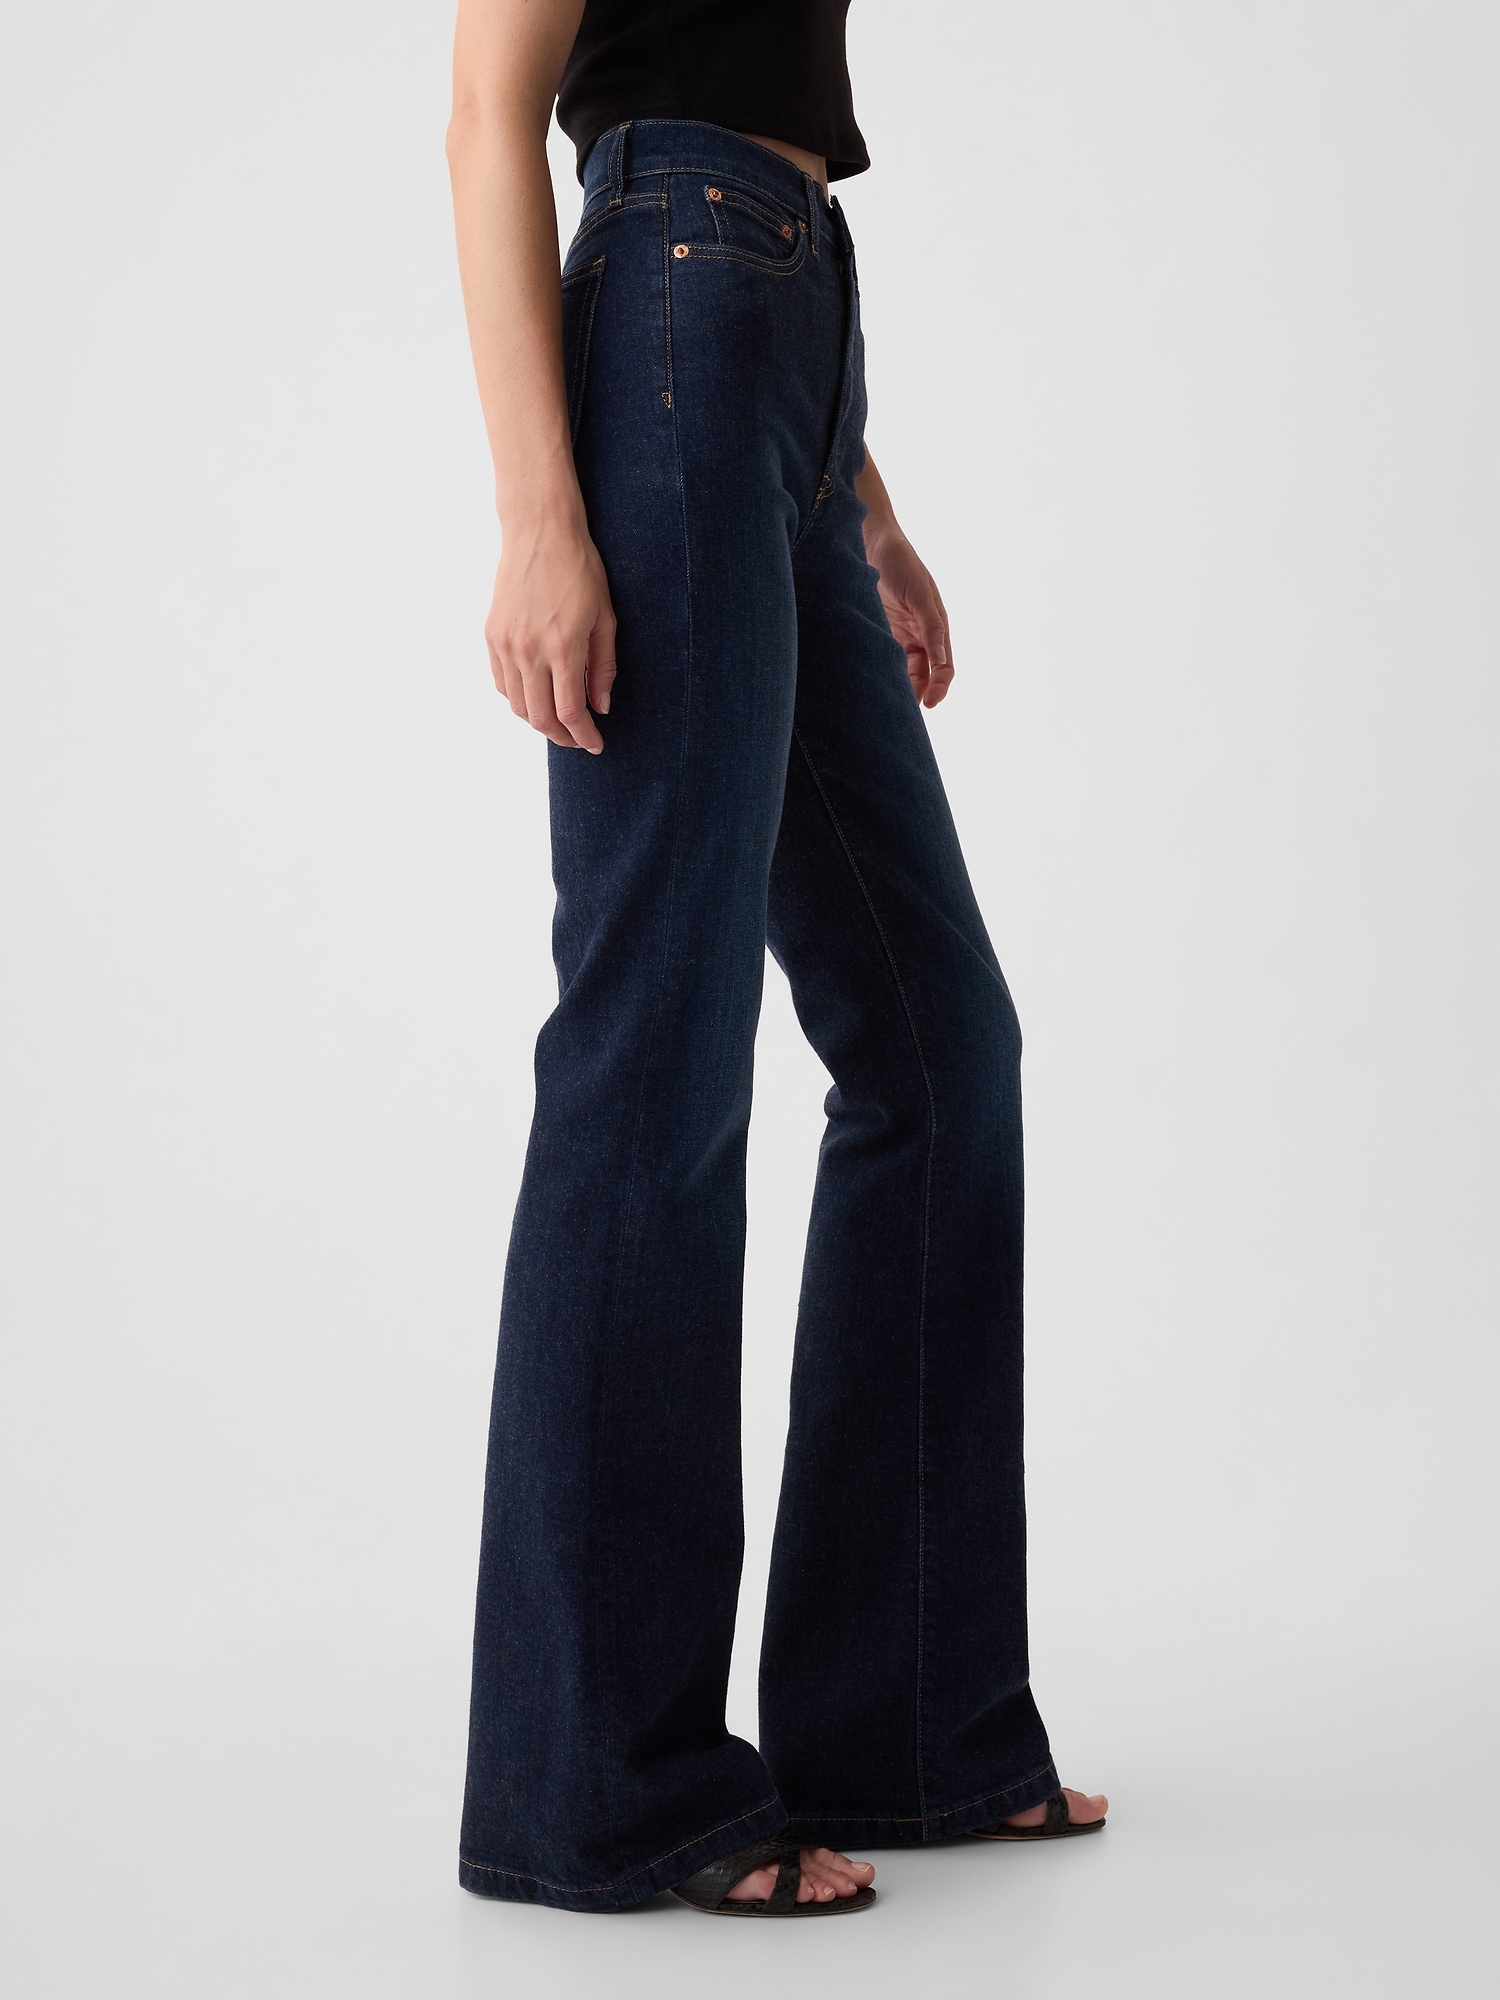 Bell-bottom jeans Flare jeans Wide-leg denim Women's retro jeans Vintage-inspired  pants 70s style